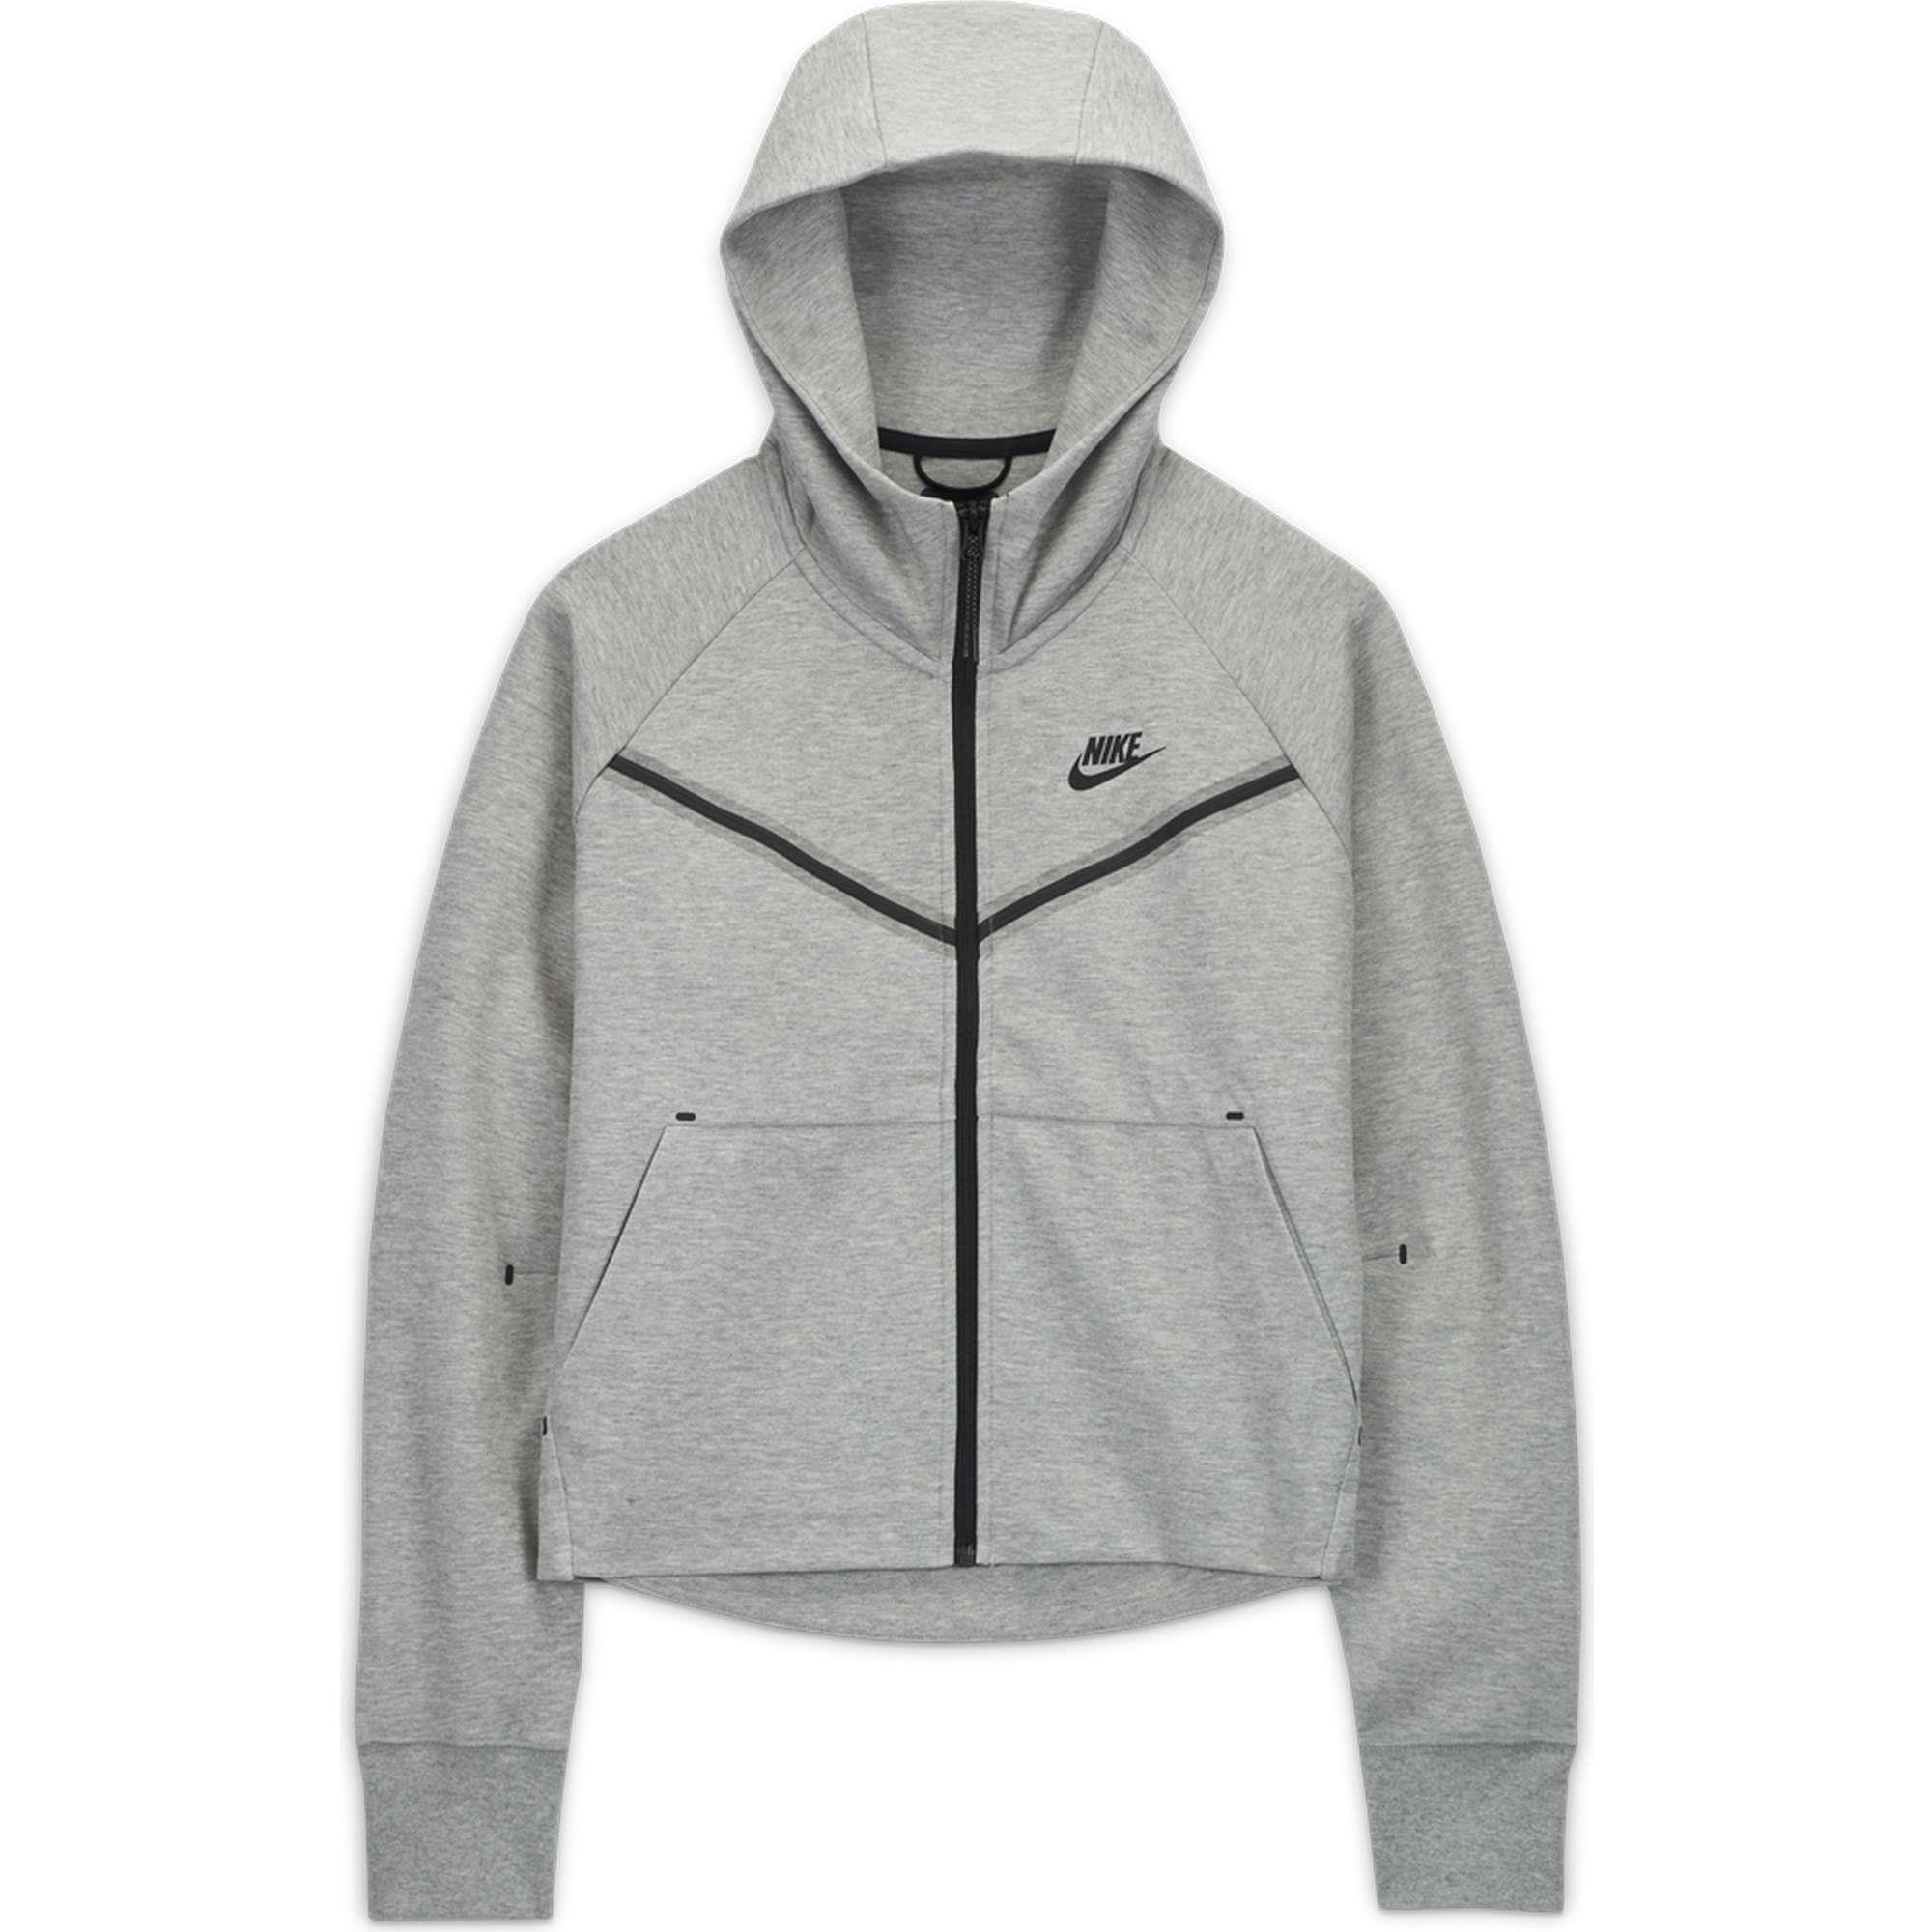 Nacht geduldig censuur Nike Sportswear Tech Fleece Windrunner vest dames dark grey heather zwart